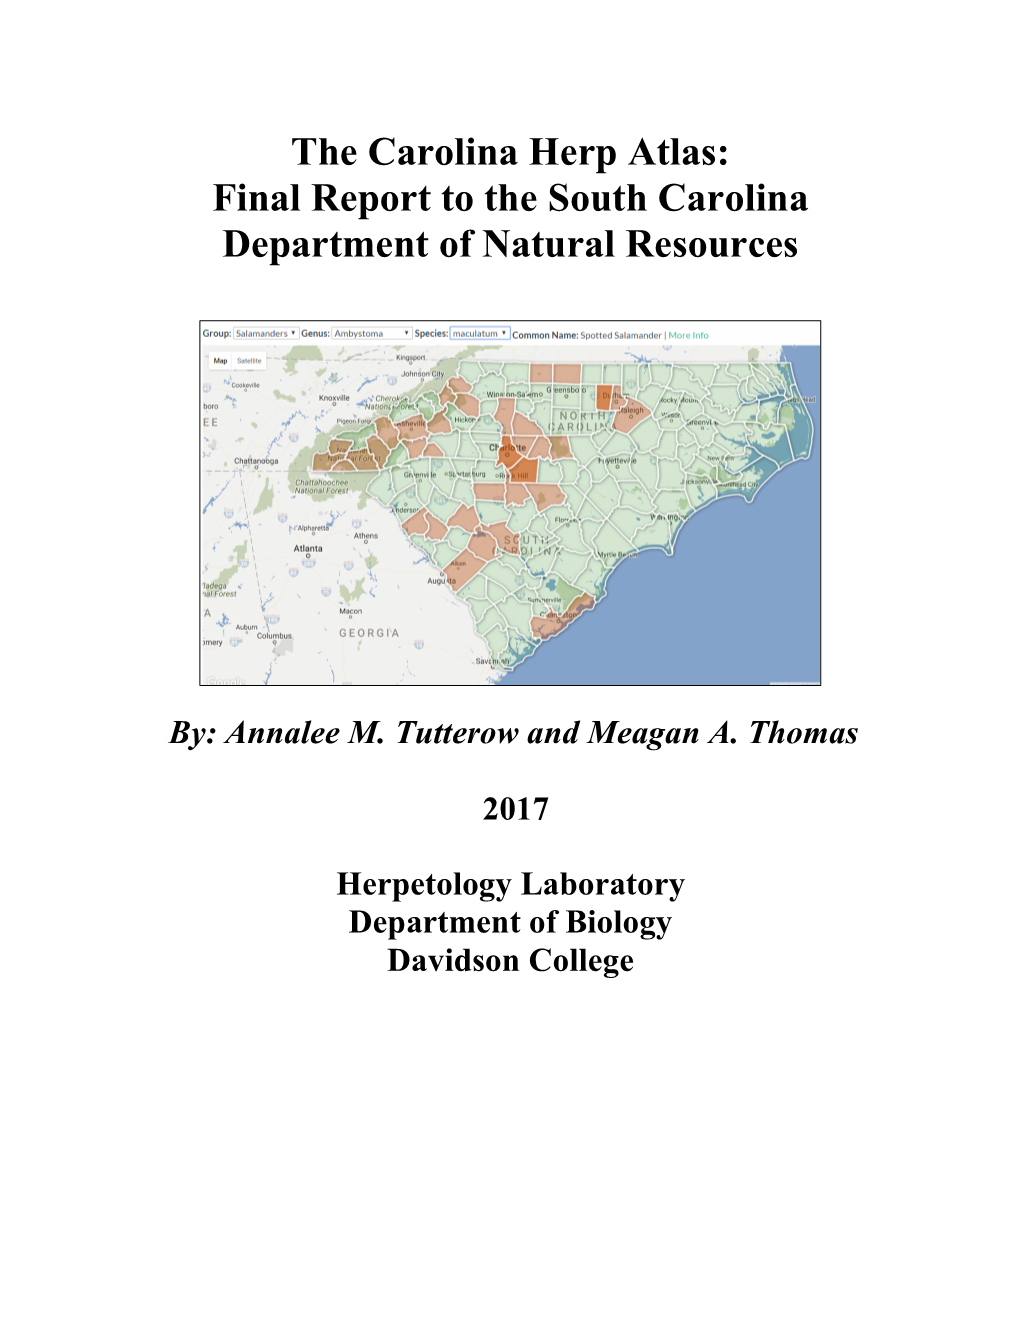 The Carolina Herp Atlas: Final Report to the South Carolina Department of Natural Resources